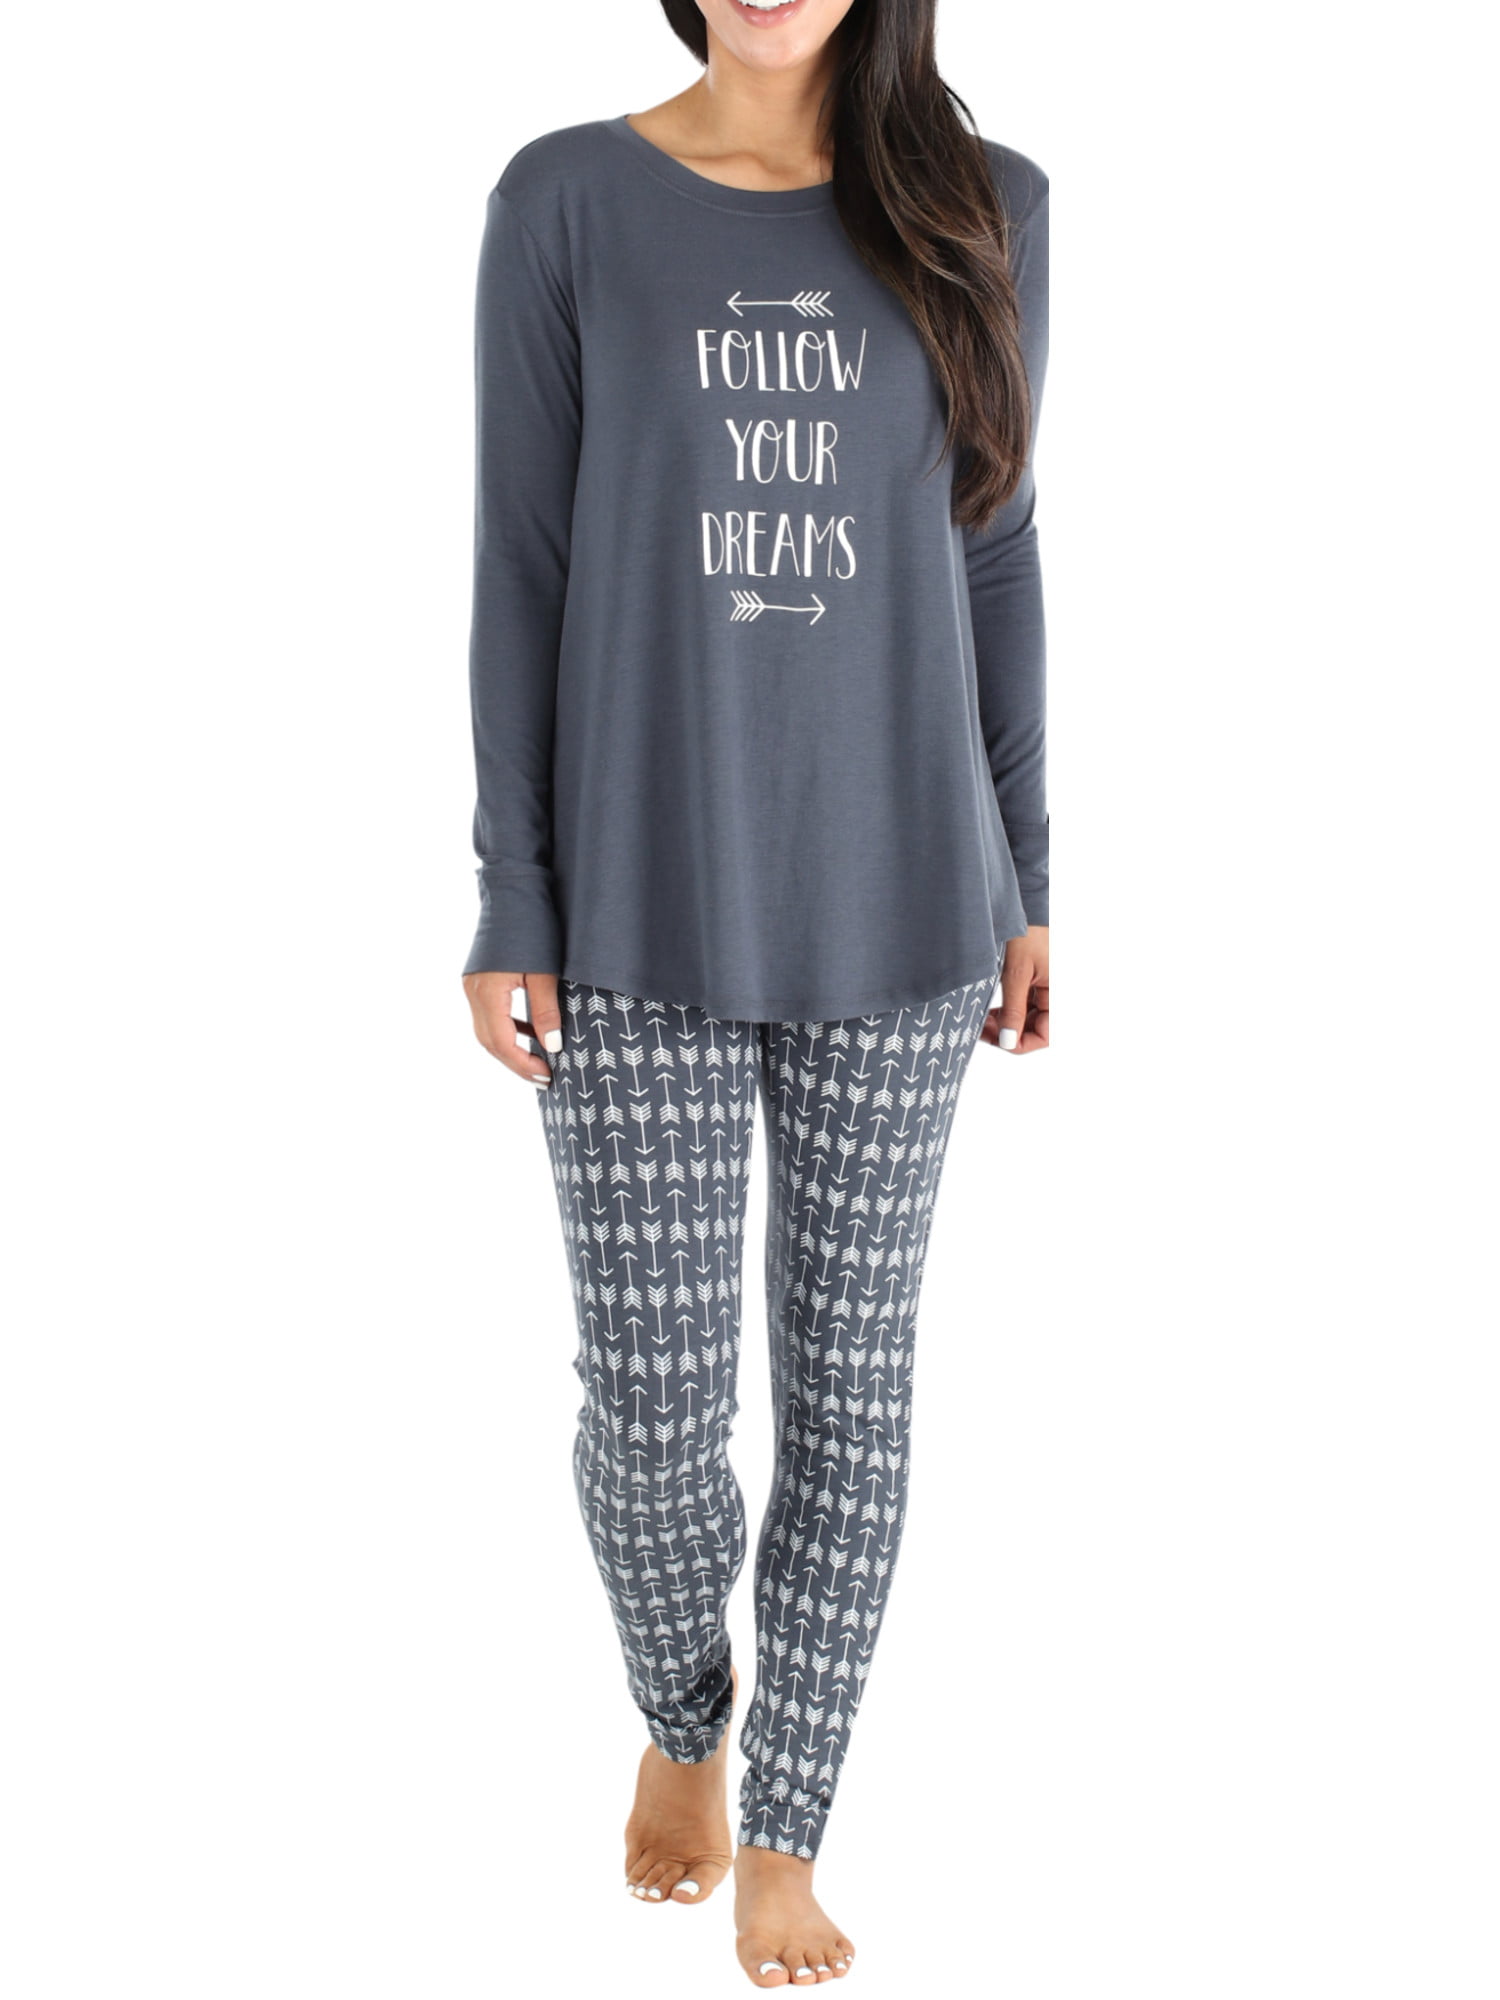 Sleepyheads Women's Knit Long Sleeve Top and Leggings Pajama Set